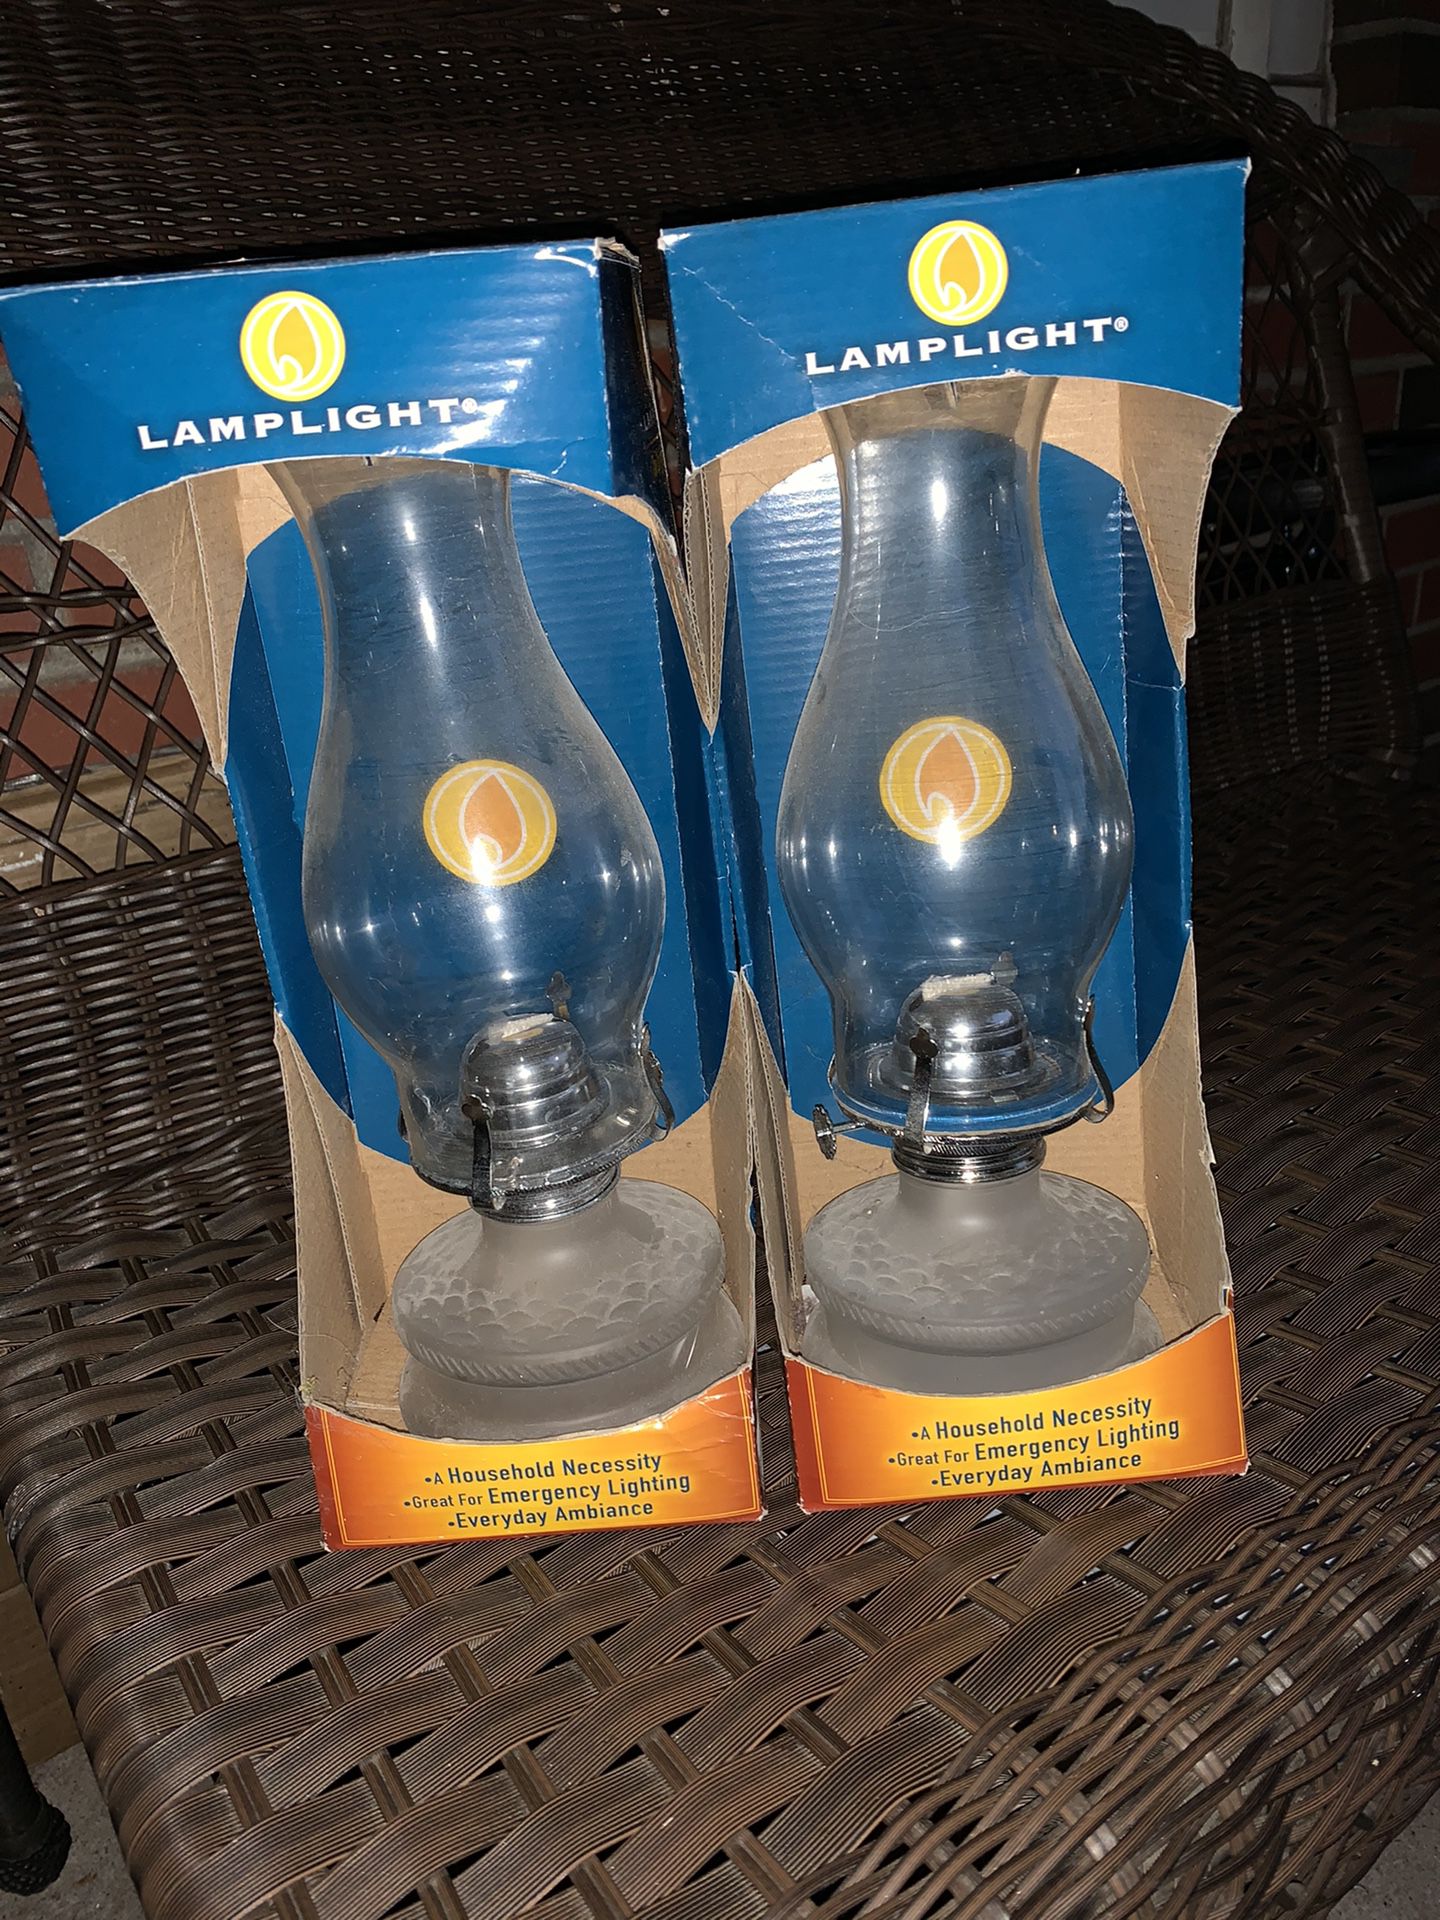 2 glass lanterns